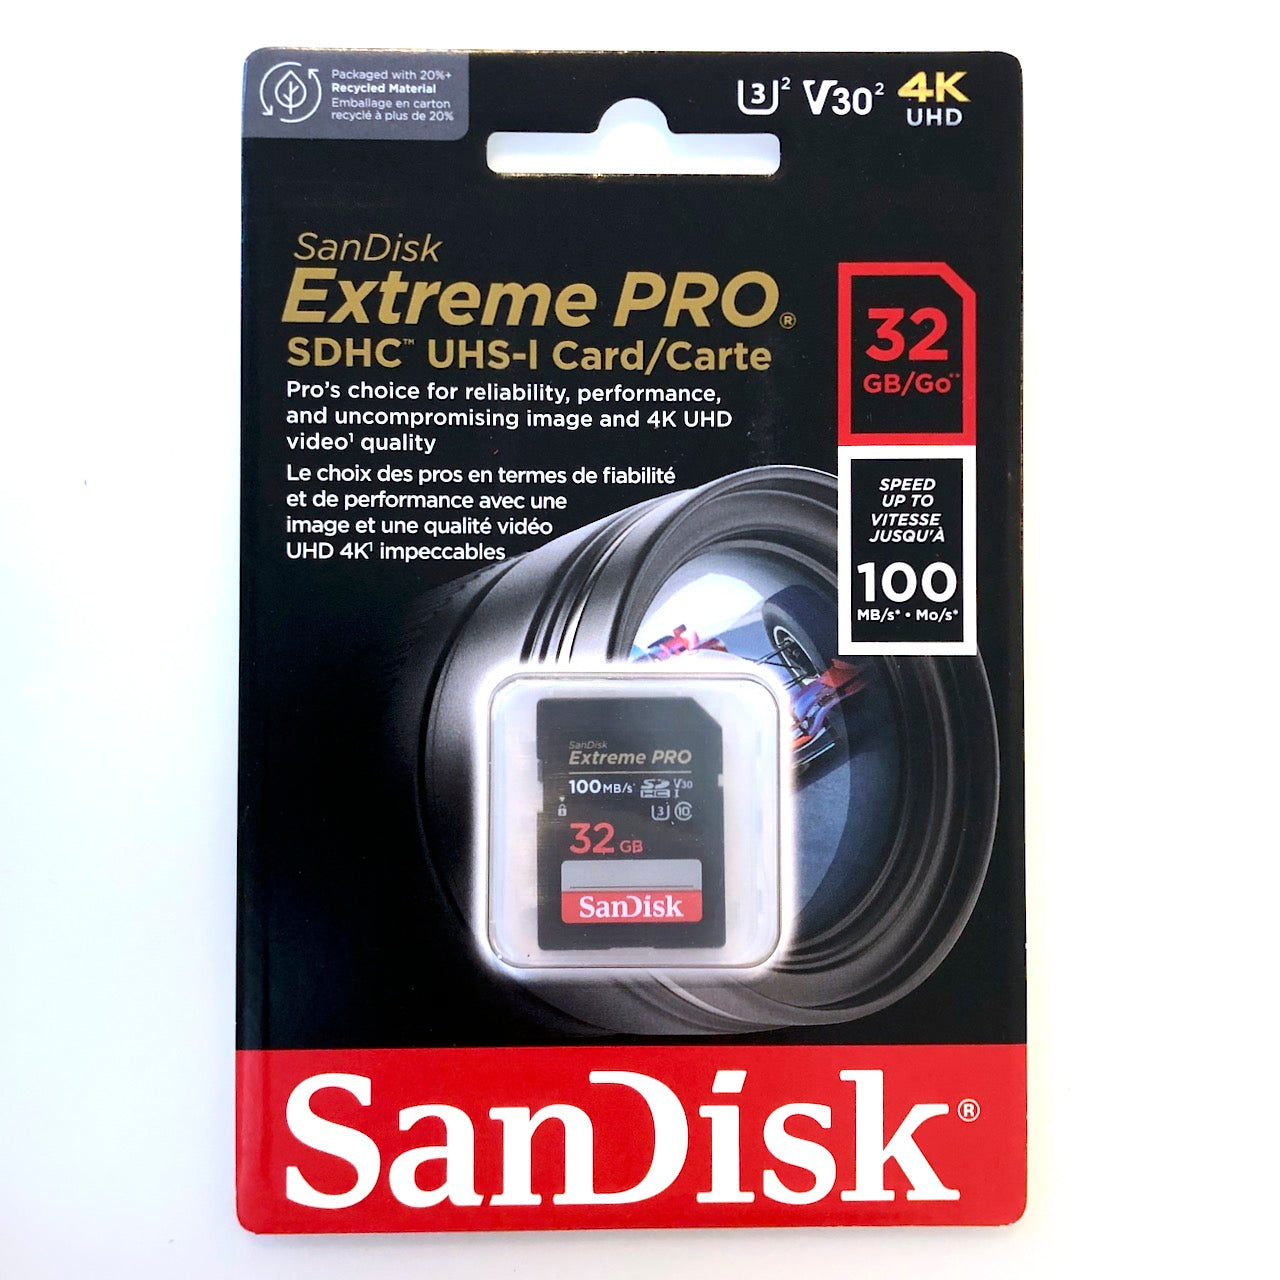 Sandisk Extreme Pro 32gb SDHC UHS-1 Card